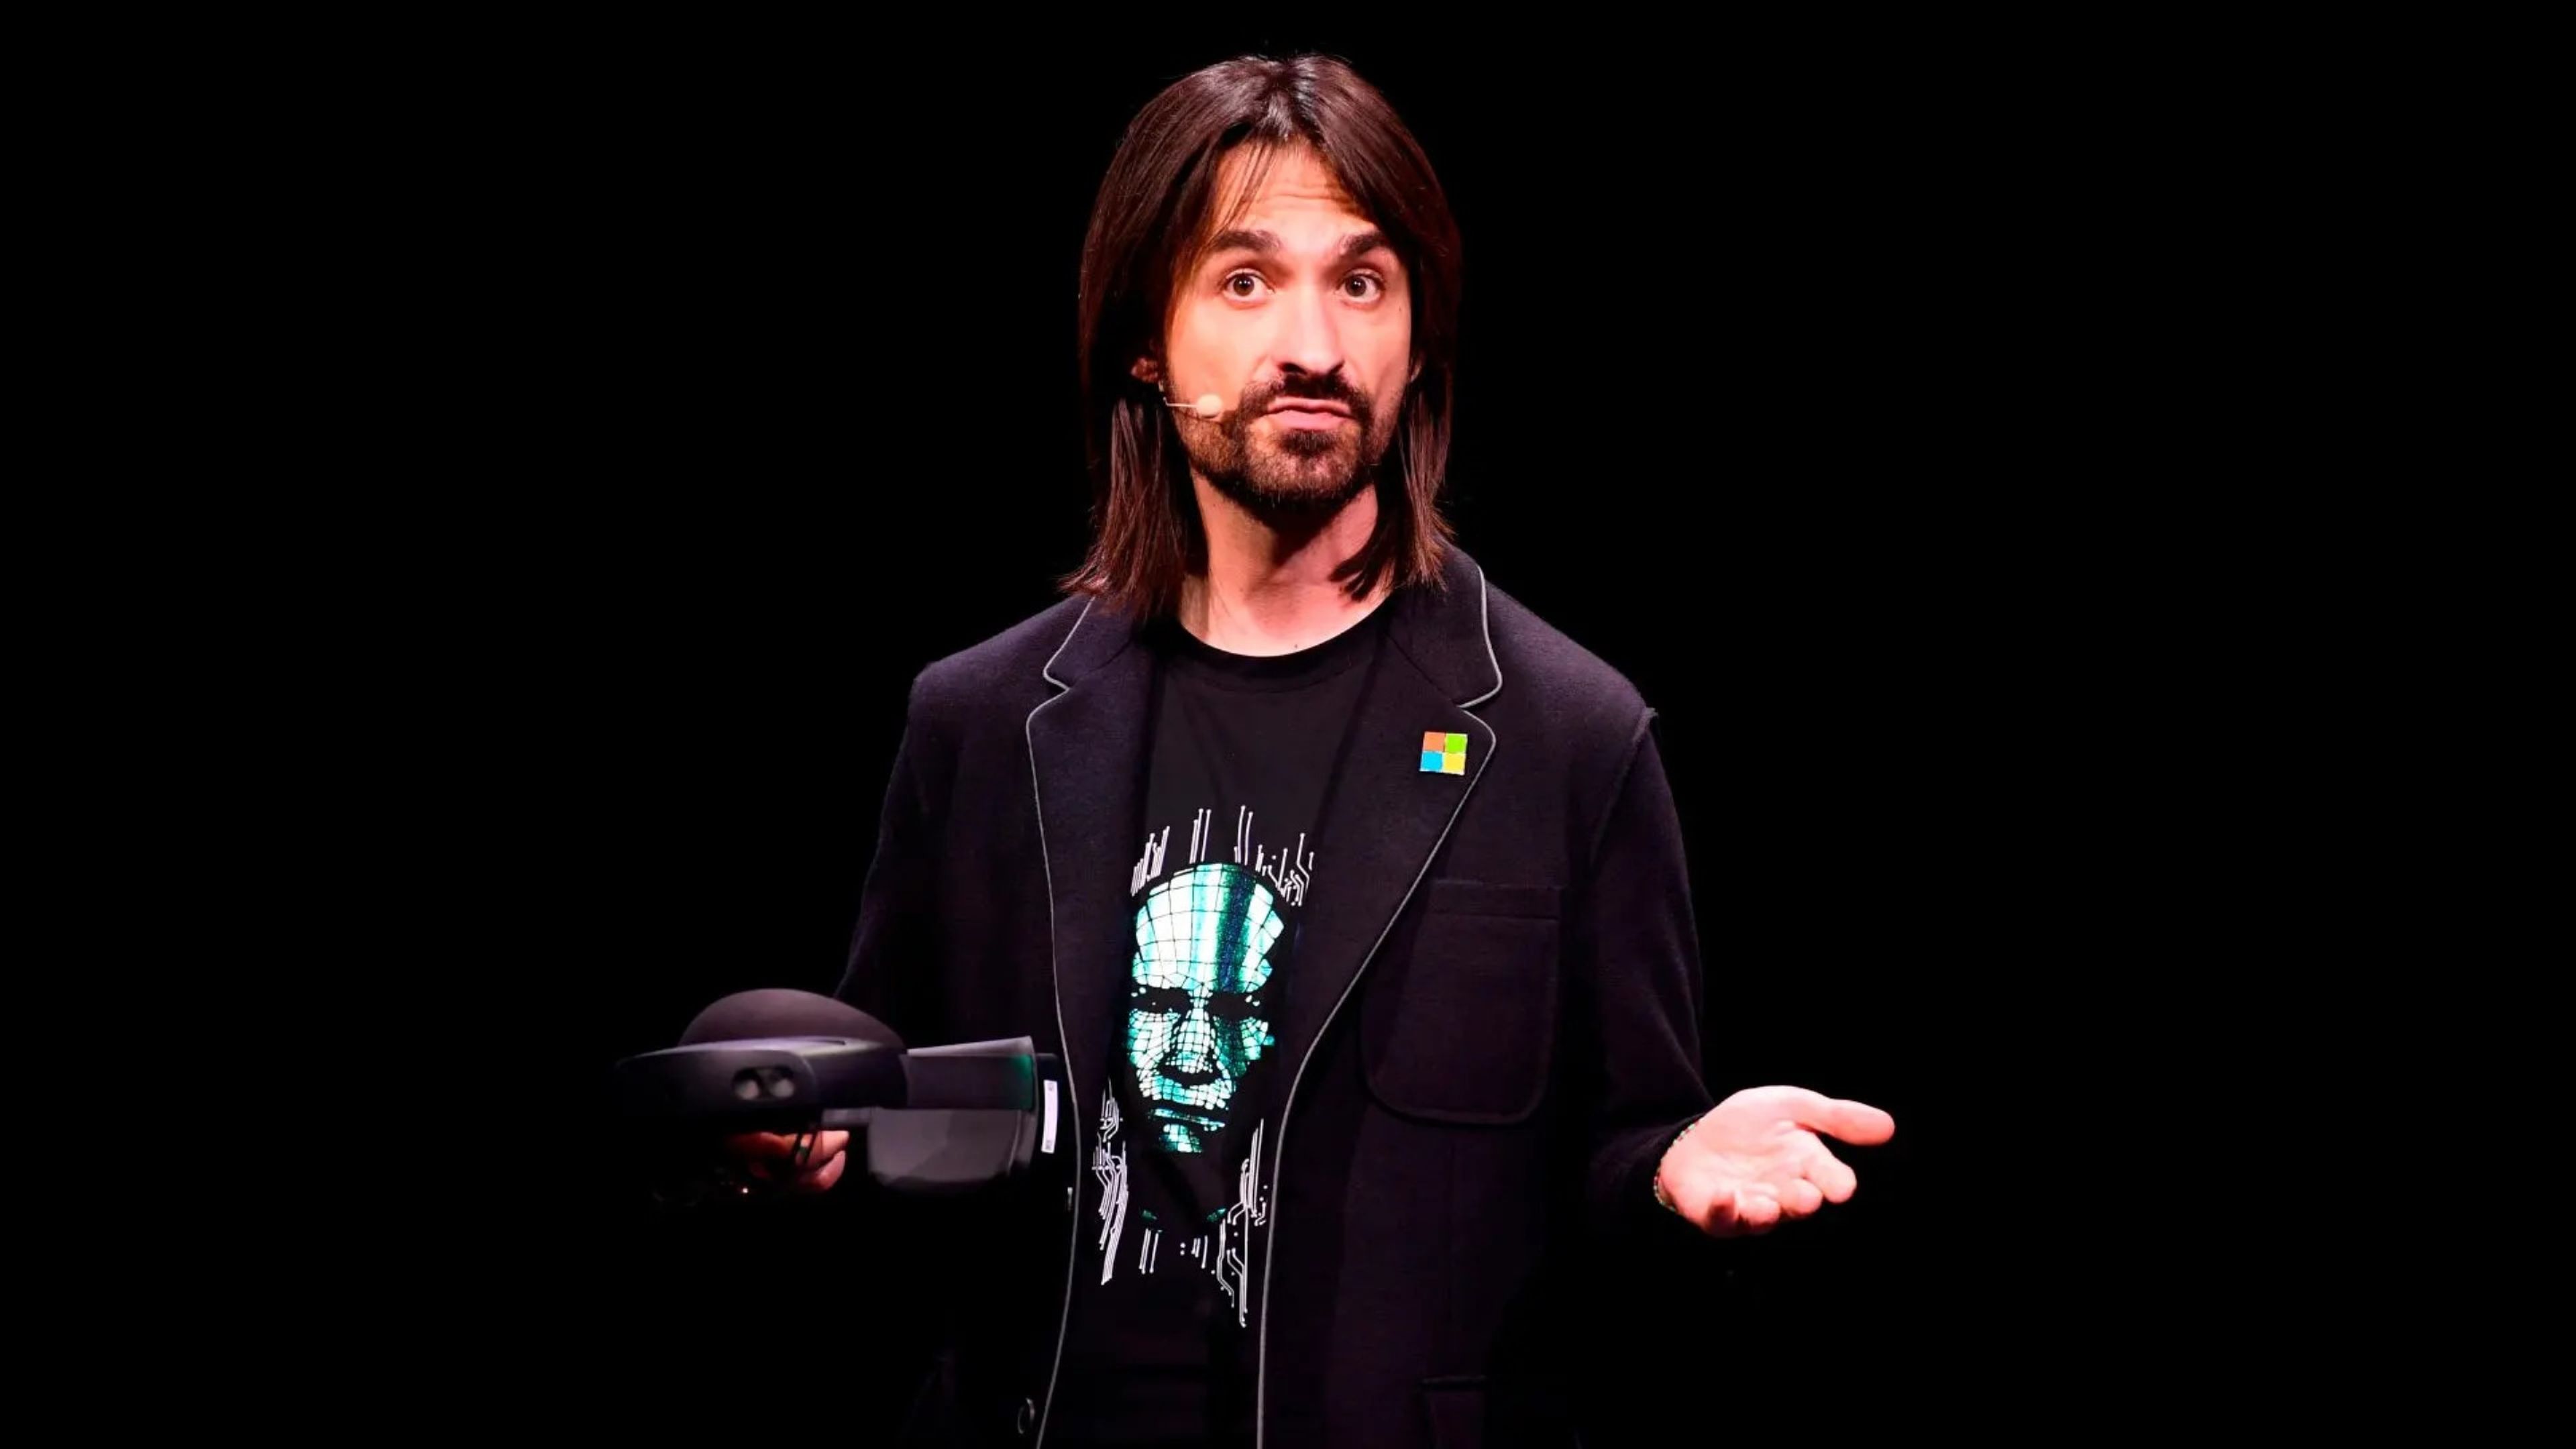 Alex Kipman - Creador de Hololens y Kinect